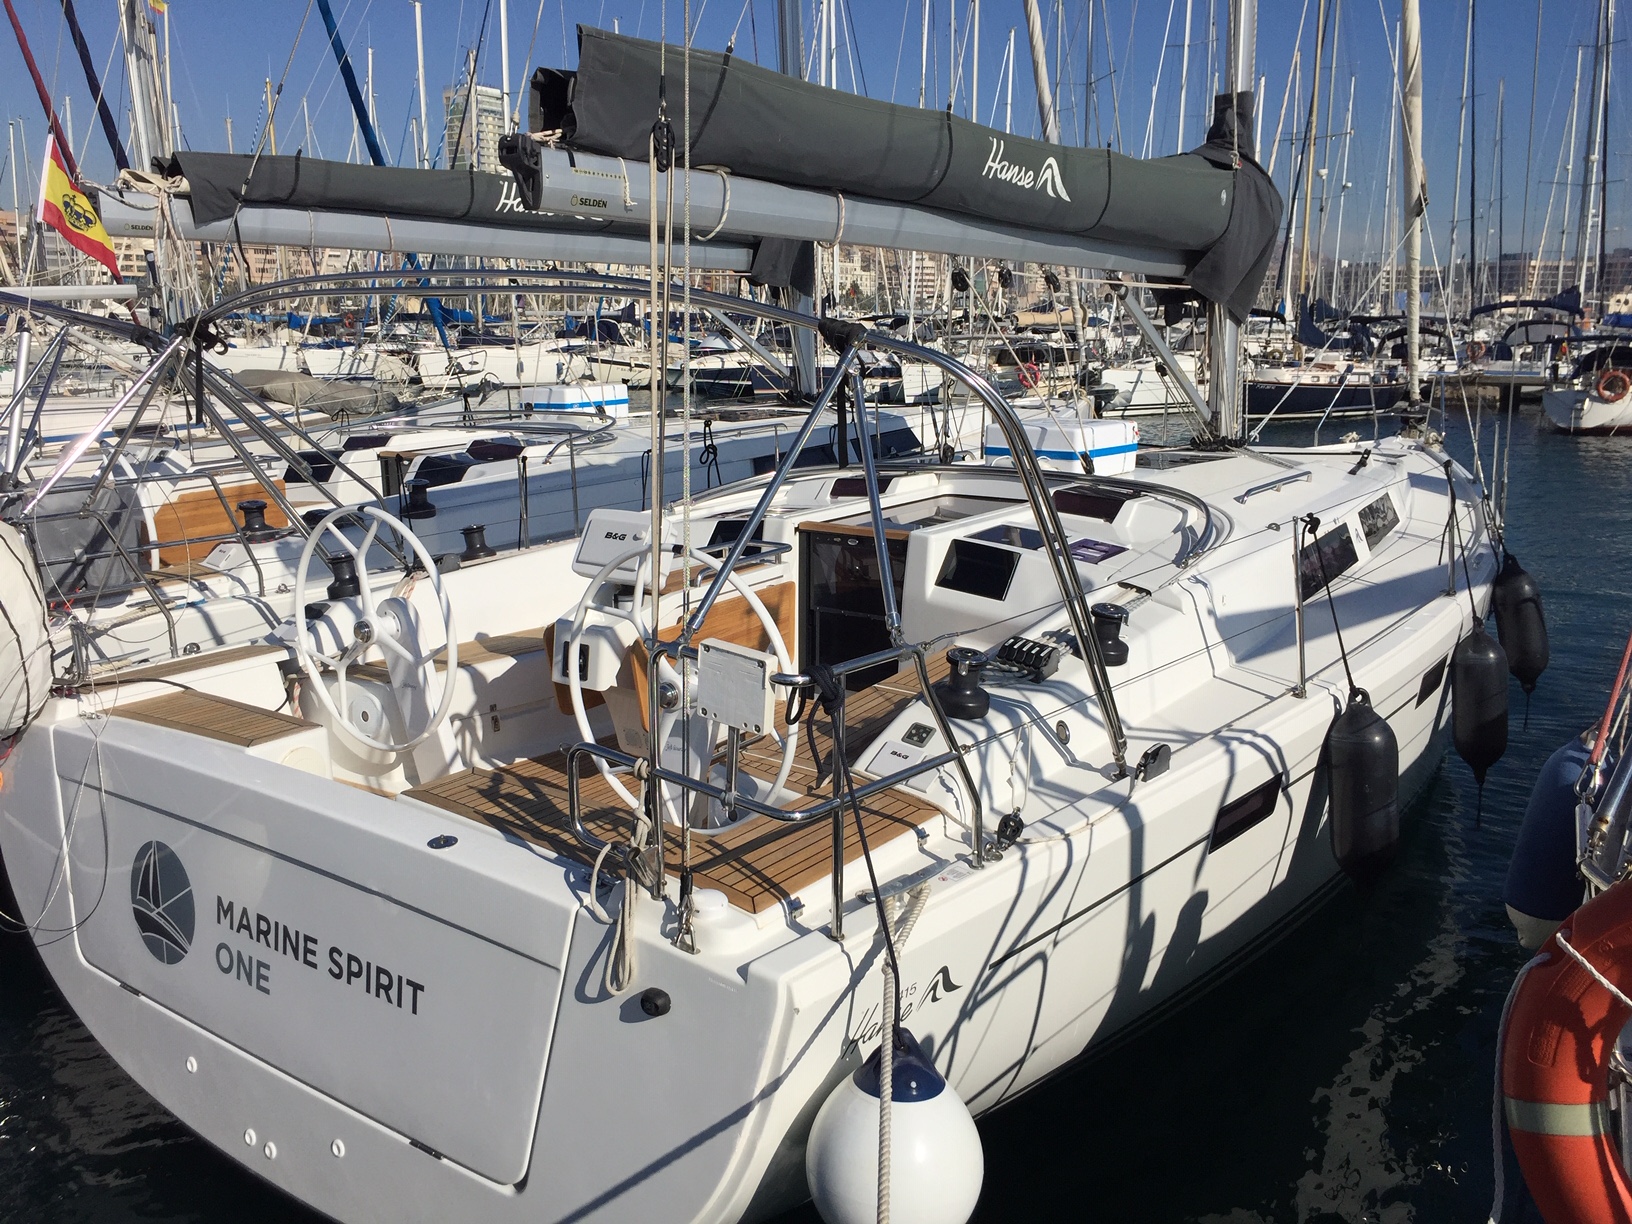 Sail boat FOR CHARTER, year 2017 brand Hanse and model 415, available in Puerto Deportivo Baiona Baiona Pontevedra España